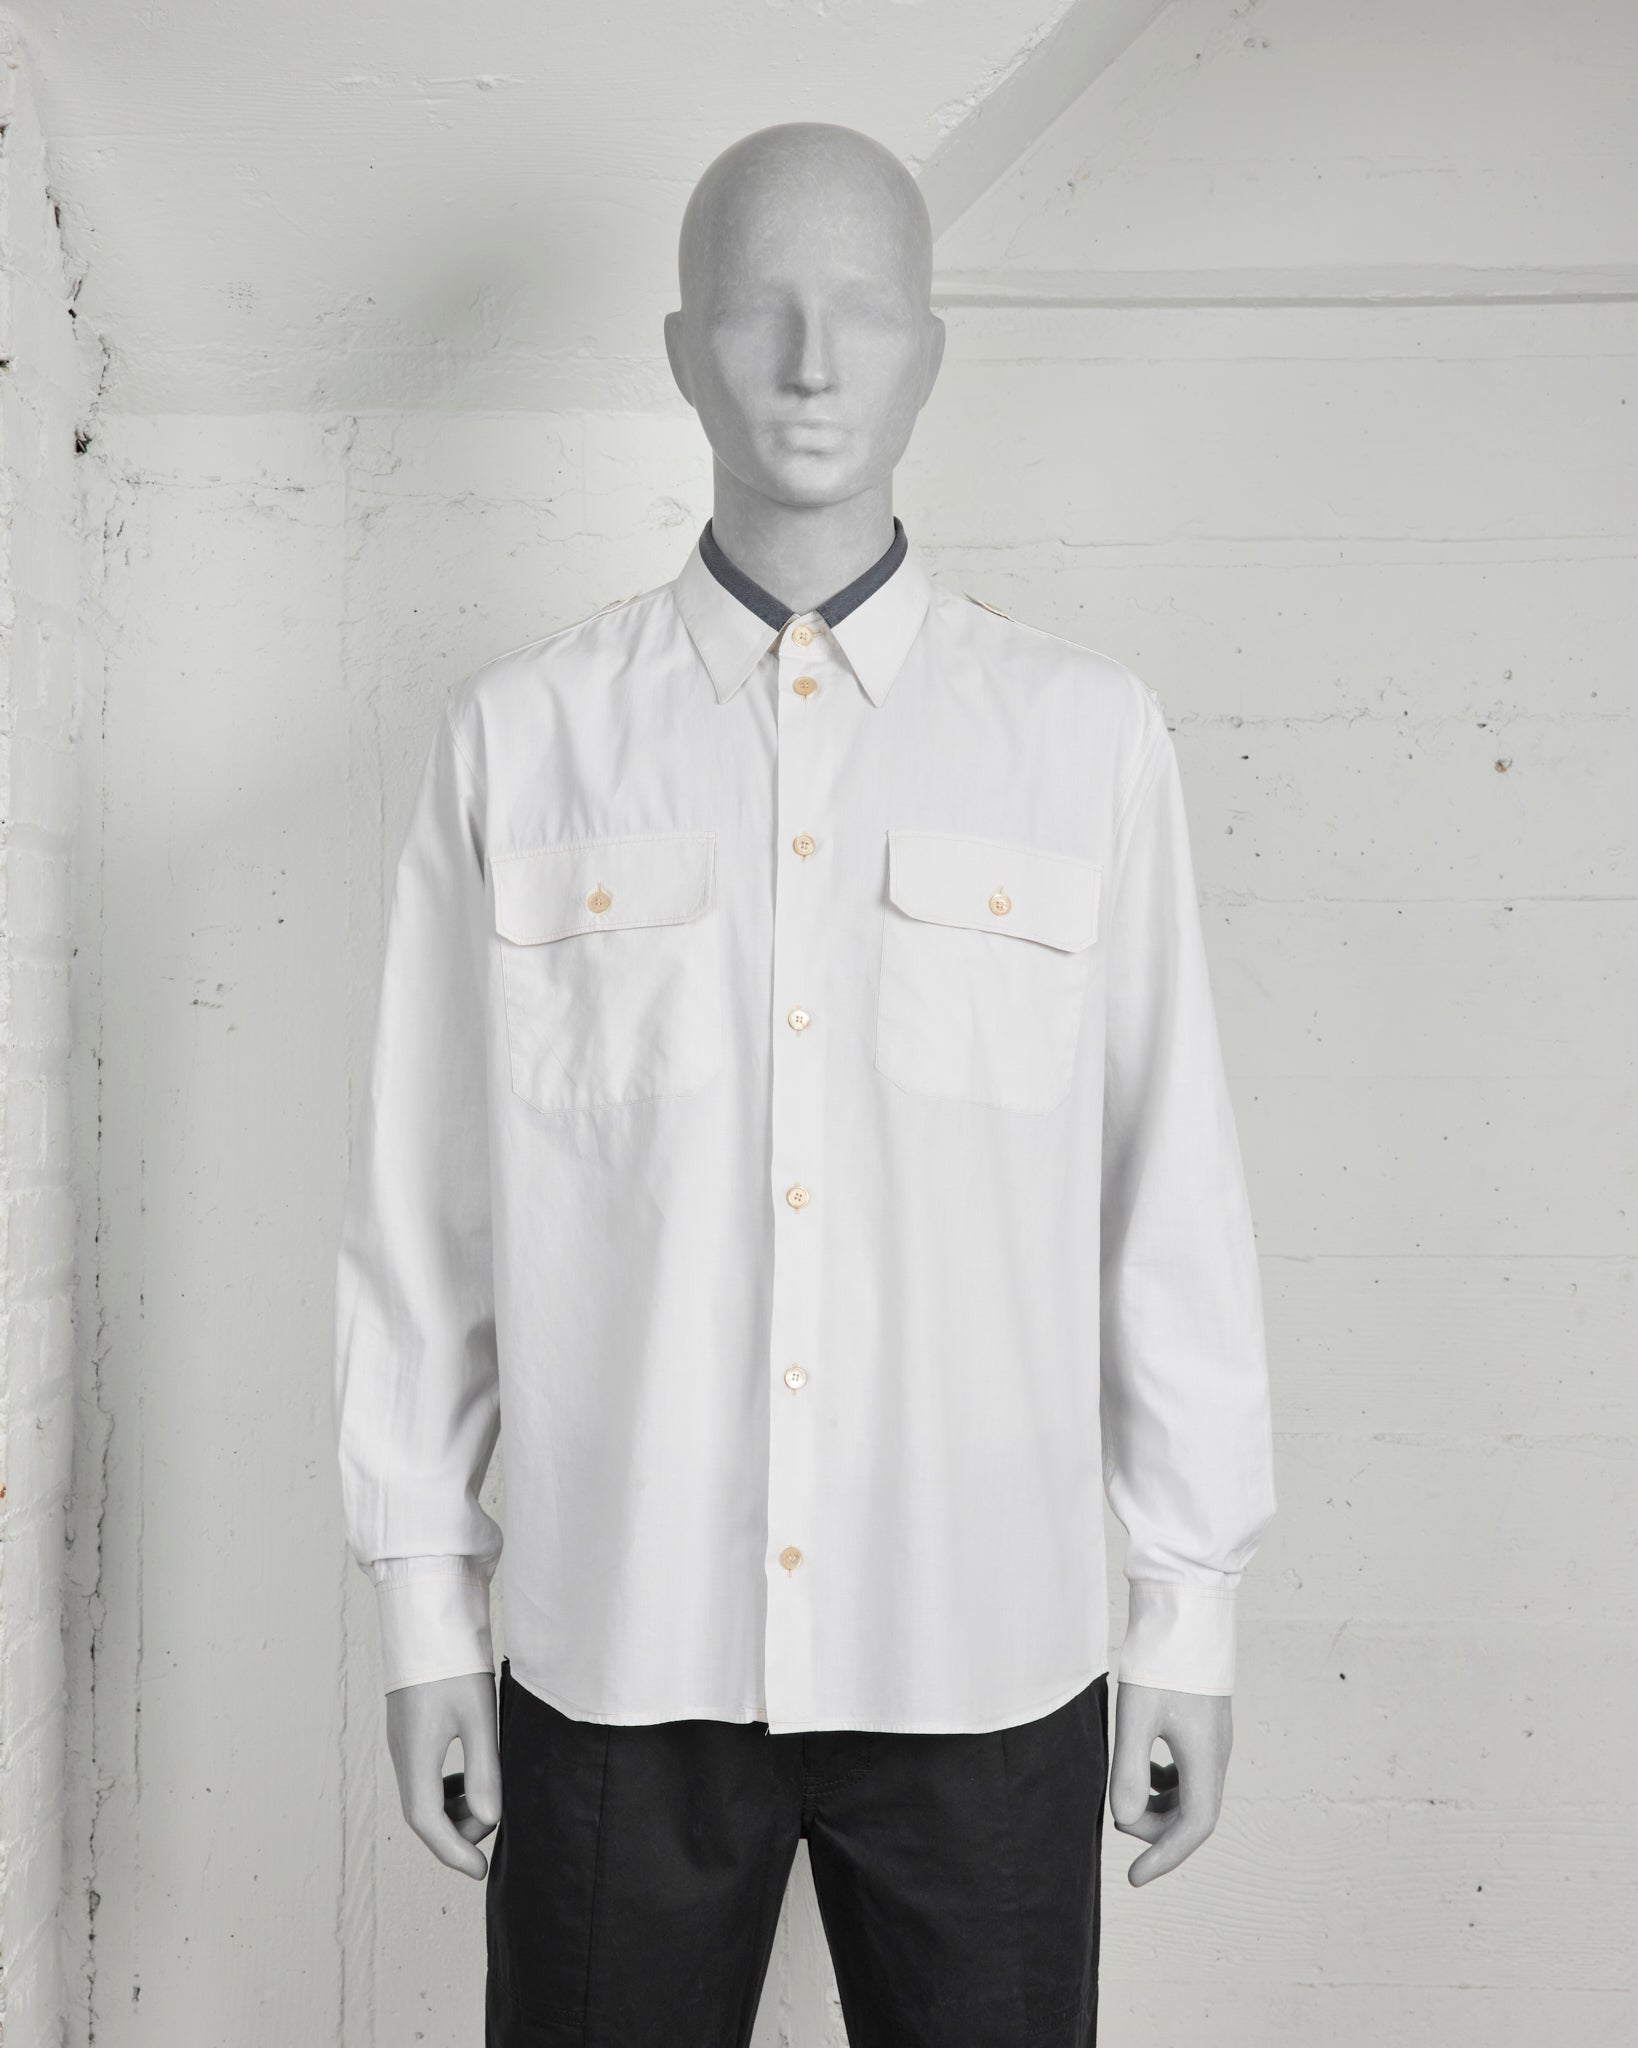 Helmut Lang White Military Shirt W/ Striped Collar - SS96